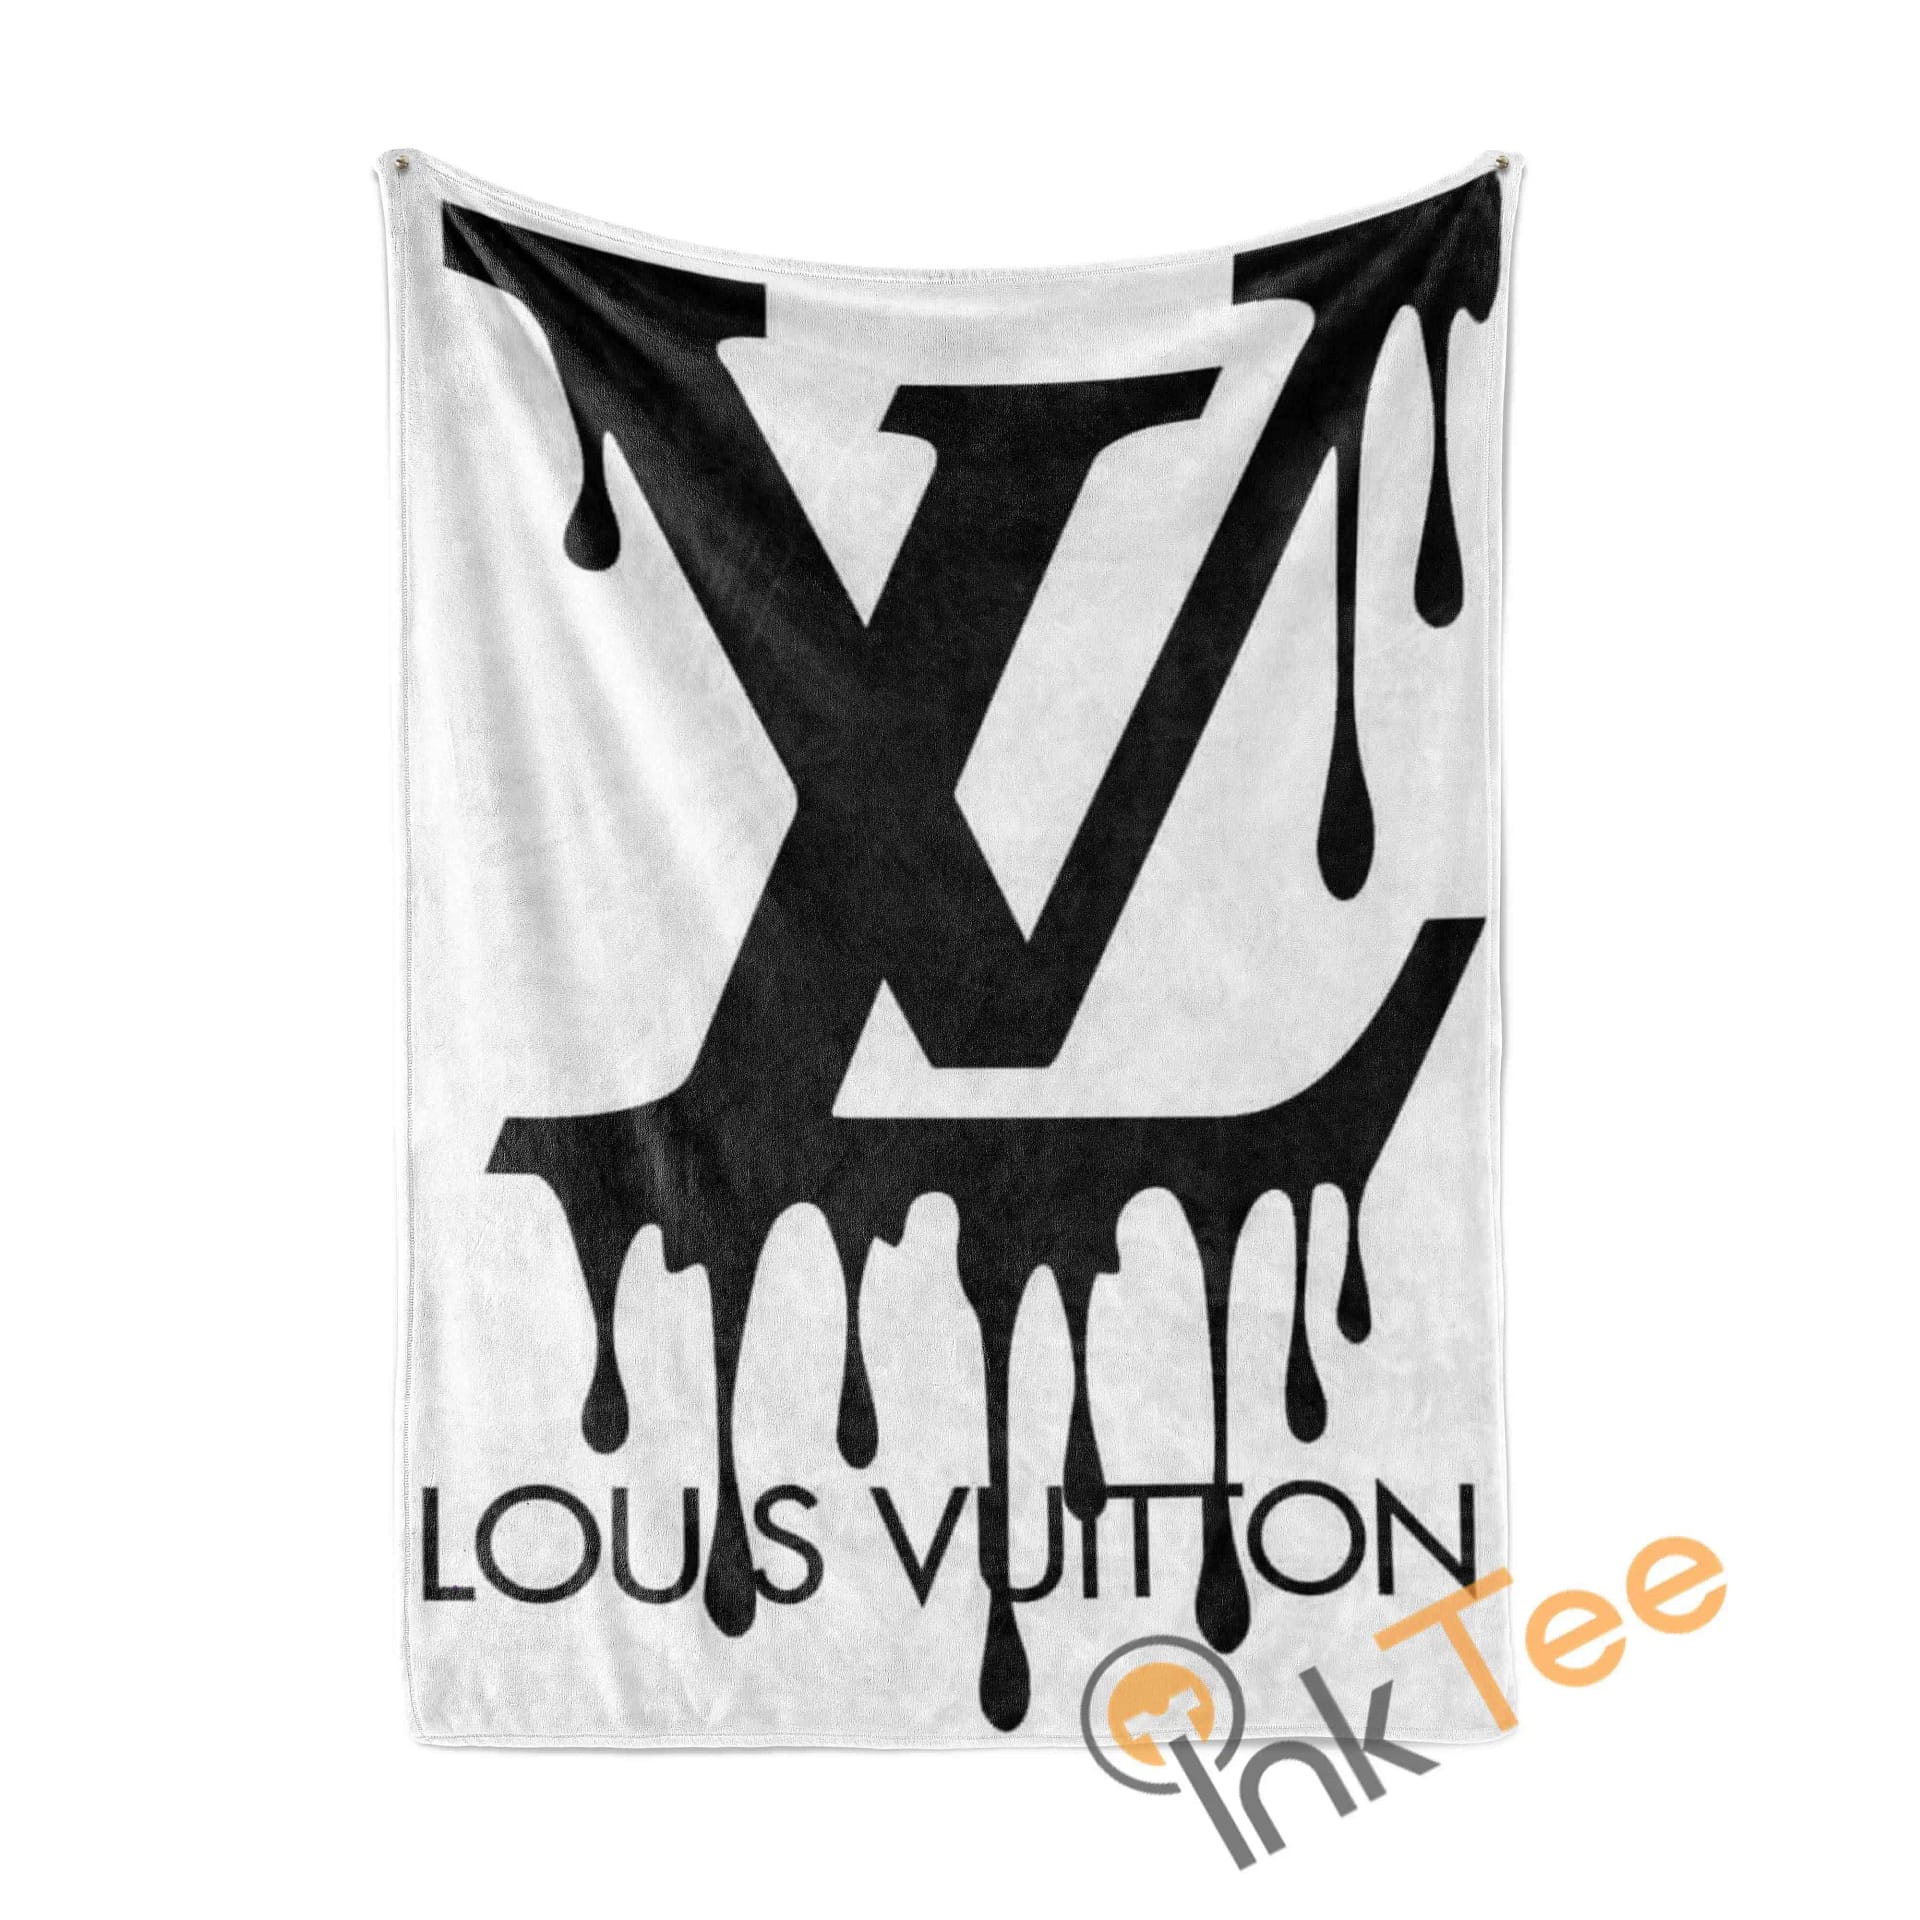 Louis Vuitton Limited Edition Amazon Best Seller Sku 4033 Fleece Blanket